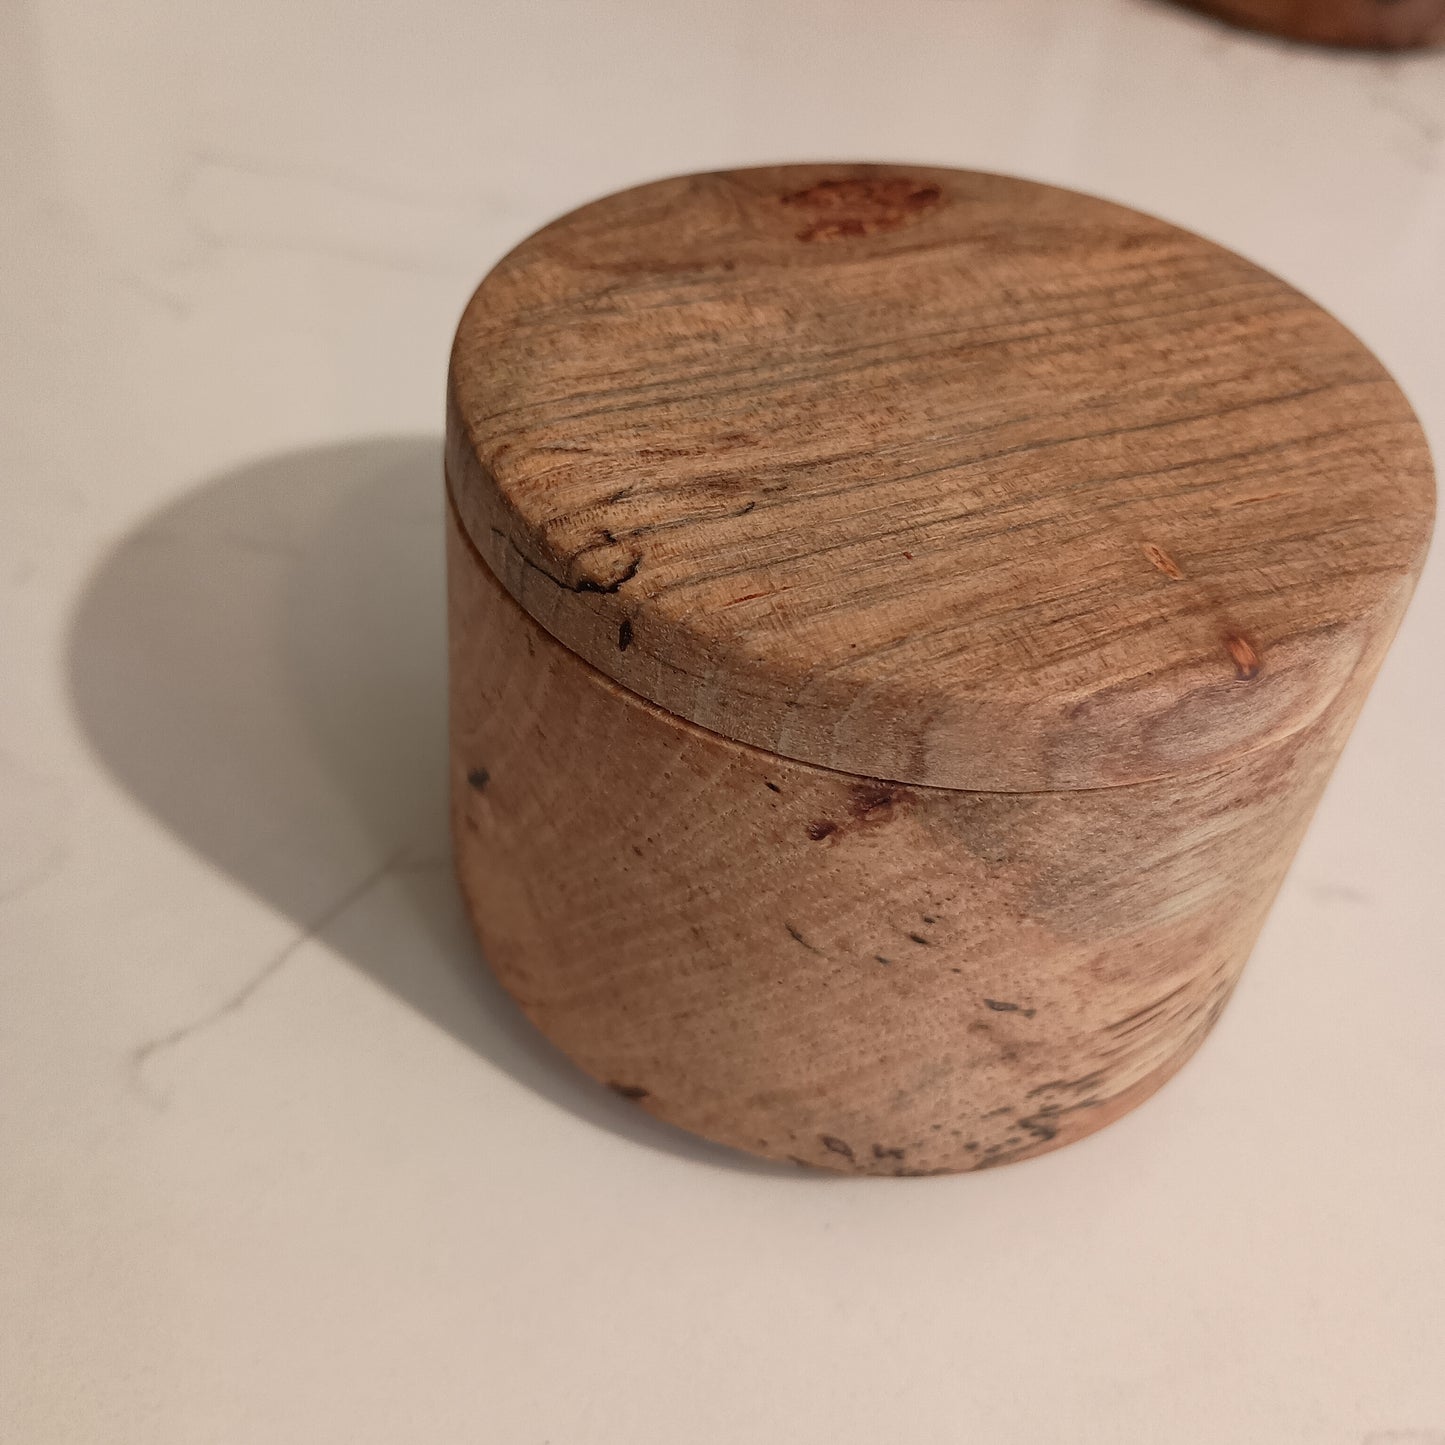 Spalted Pecan ~3" x 2.25" Lidded Box, Salt Cellar